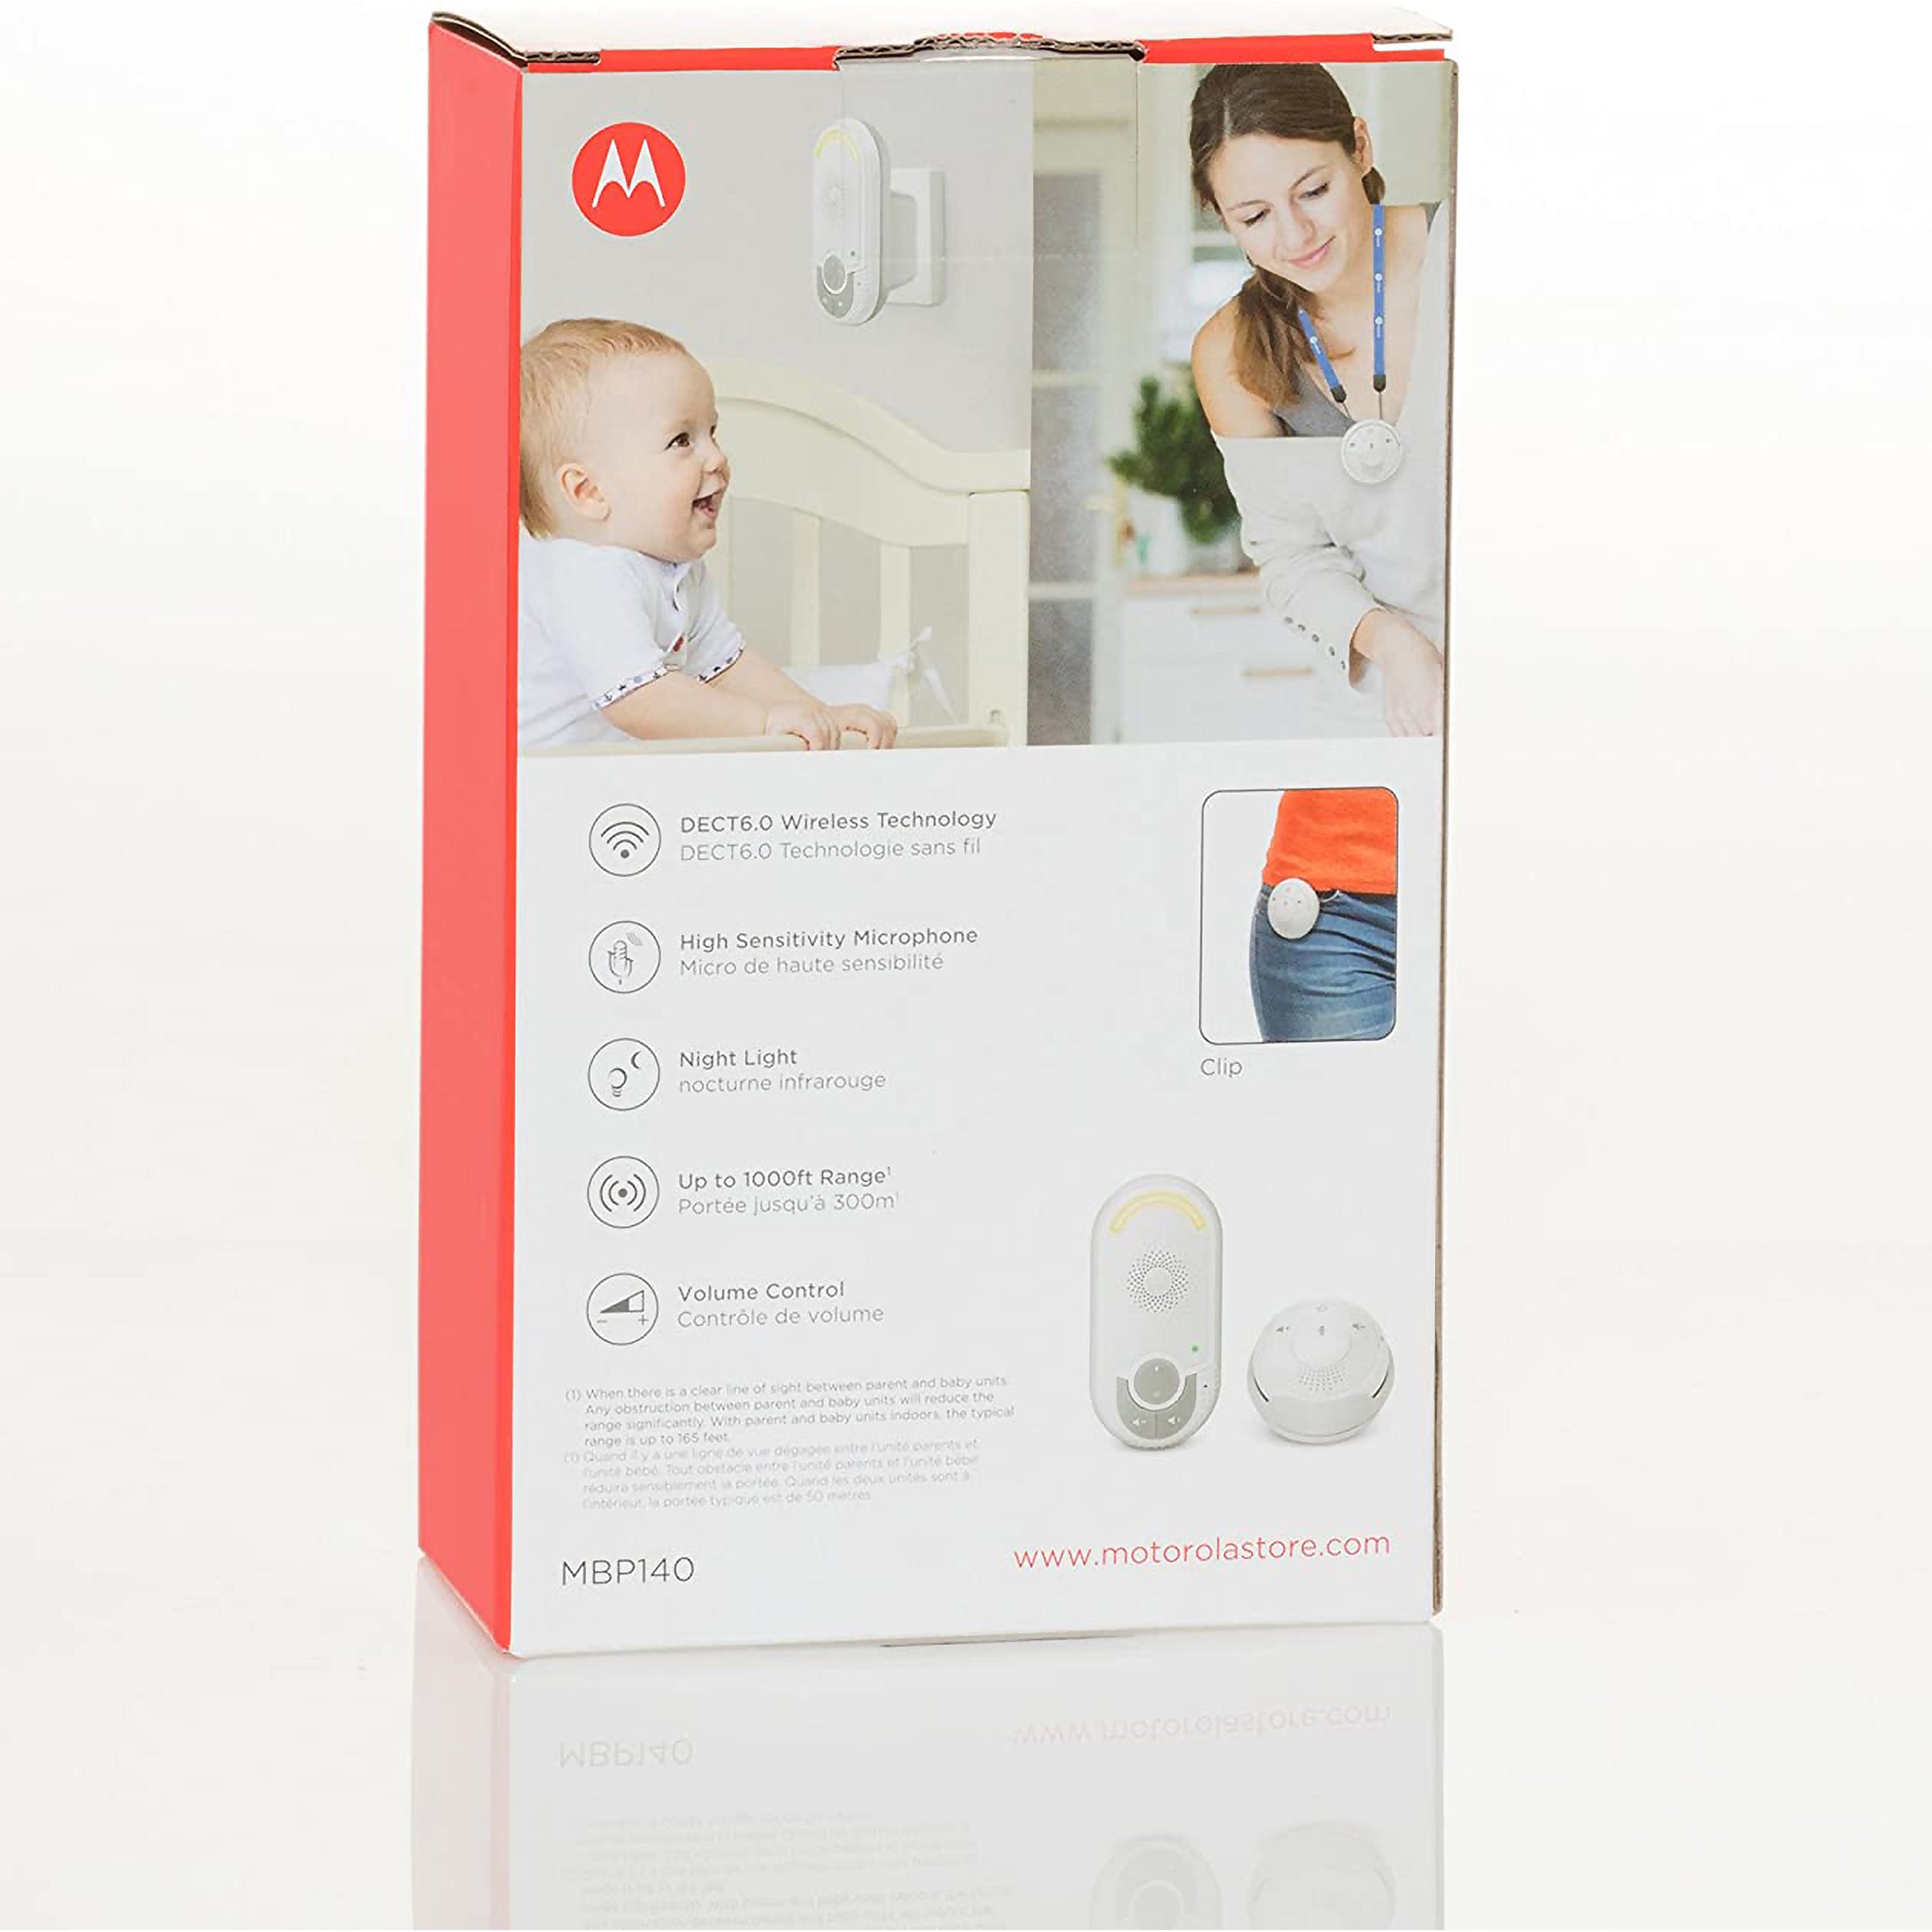 Motorola Wearable Digital Audio Baby Monitor - White - Baby Moo